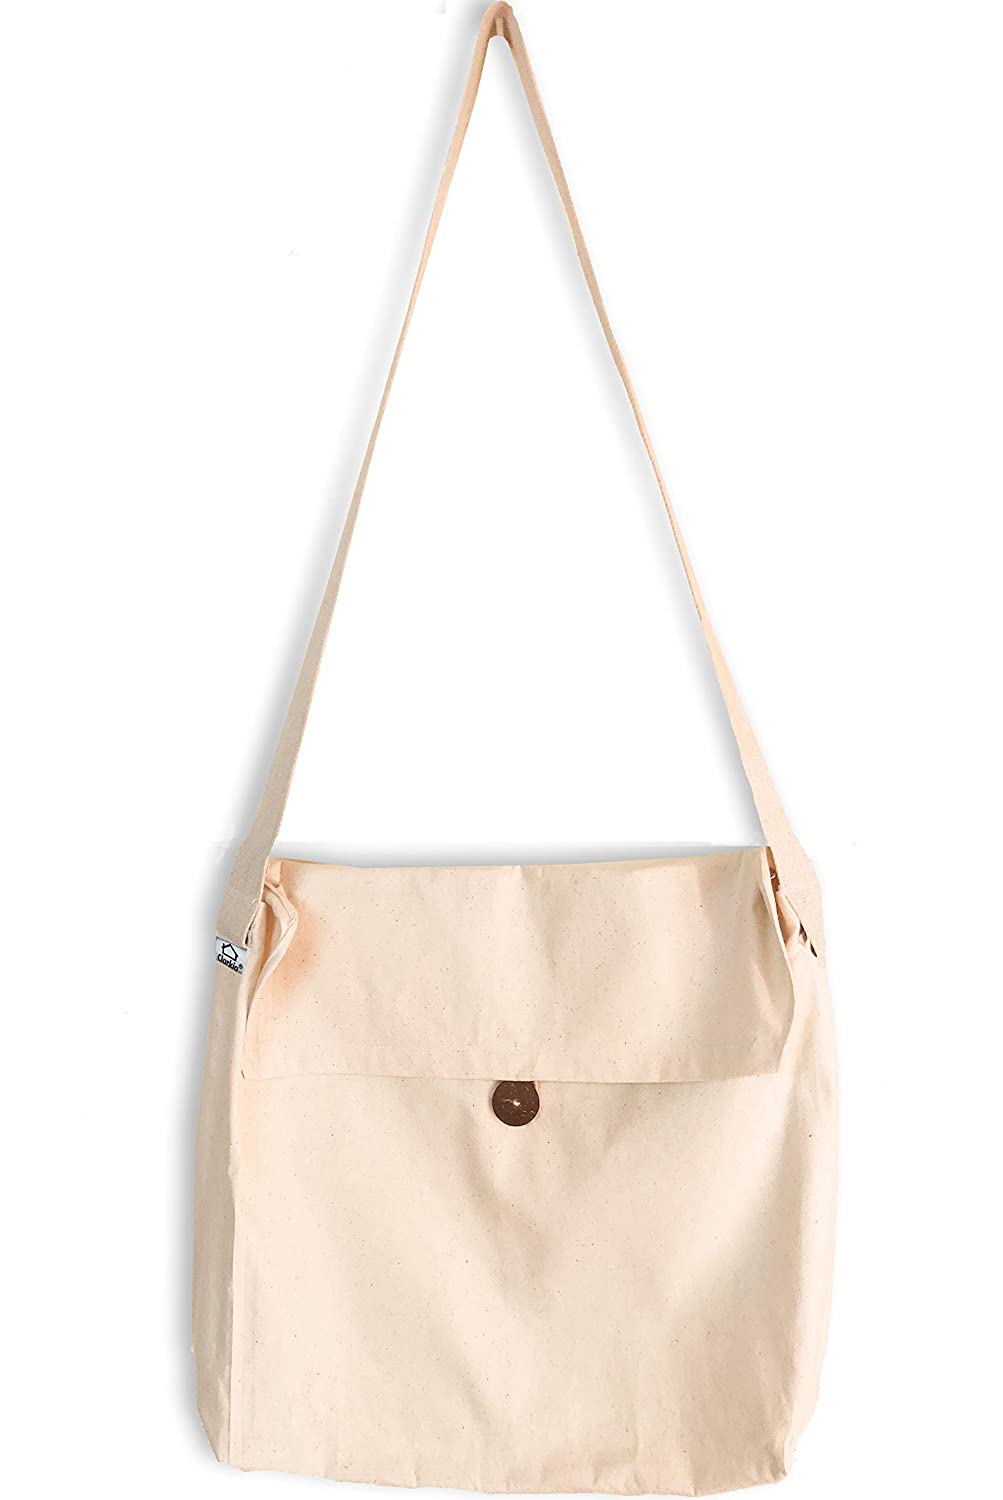 tote bag sling bag cotton